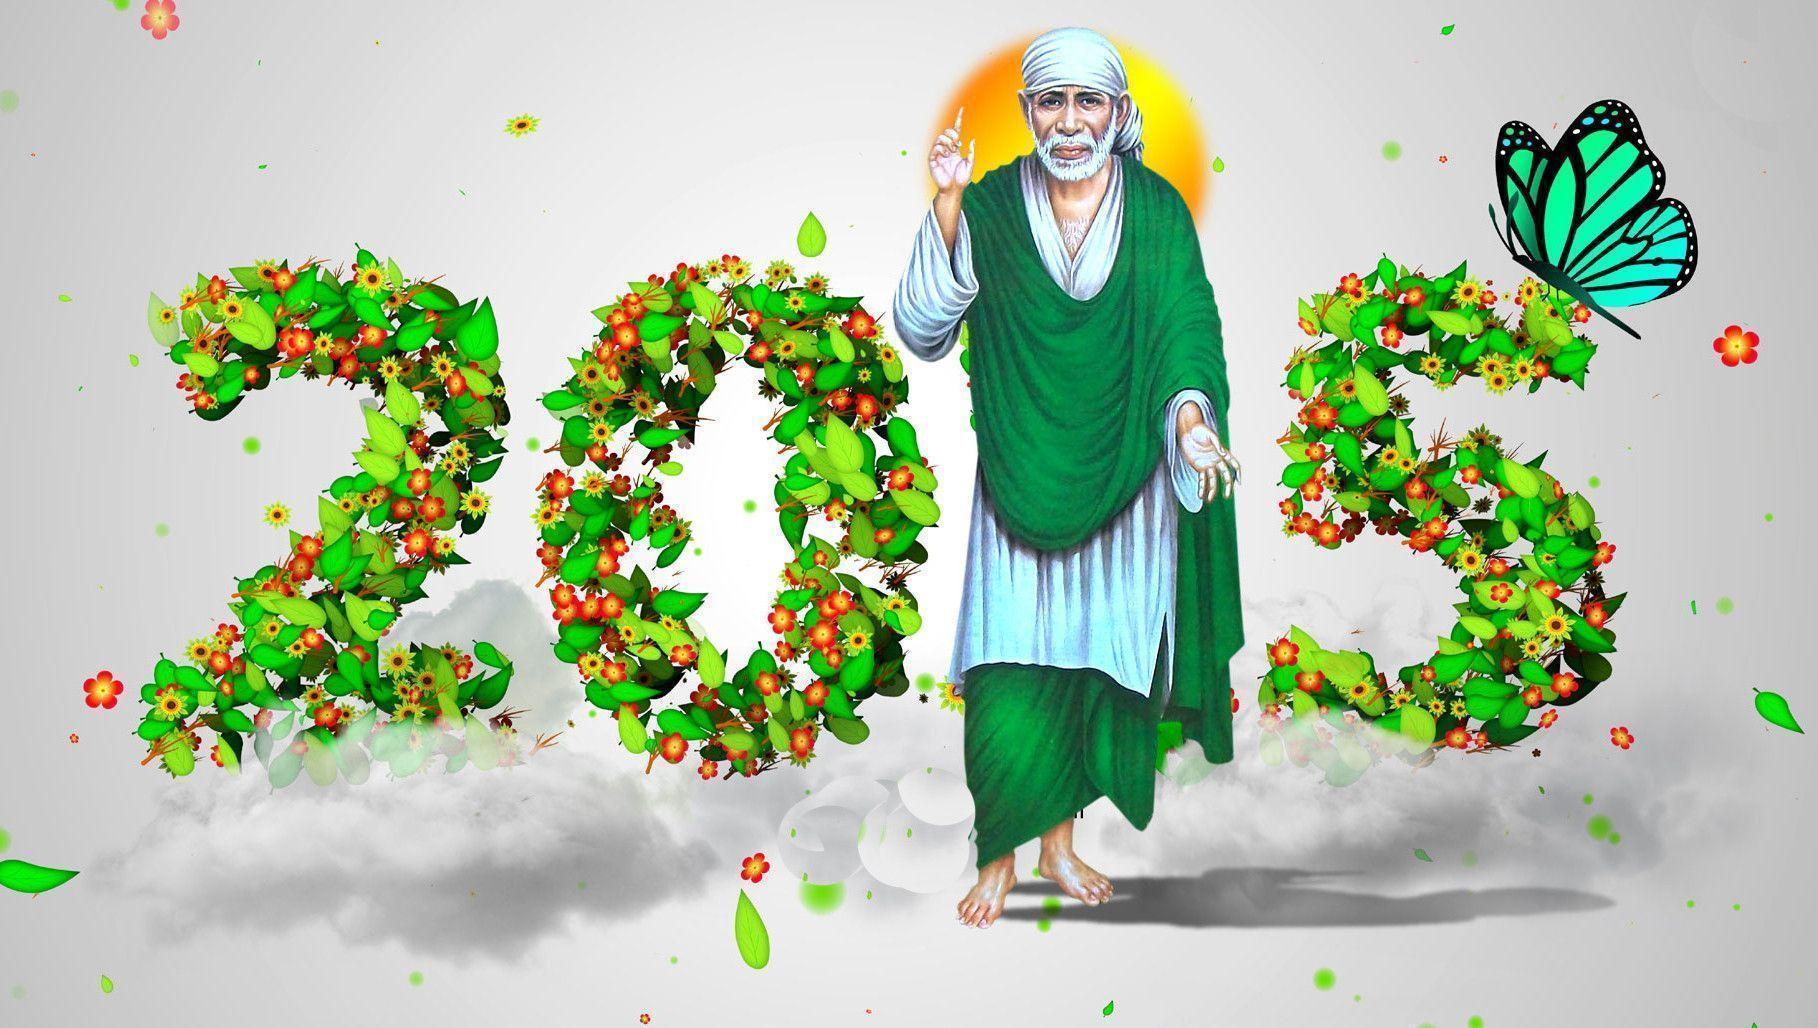 Creative*))Happy New Year Hindi Shayari Wallpaper For Facebook